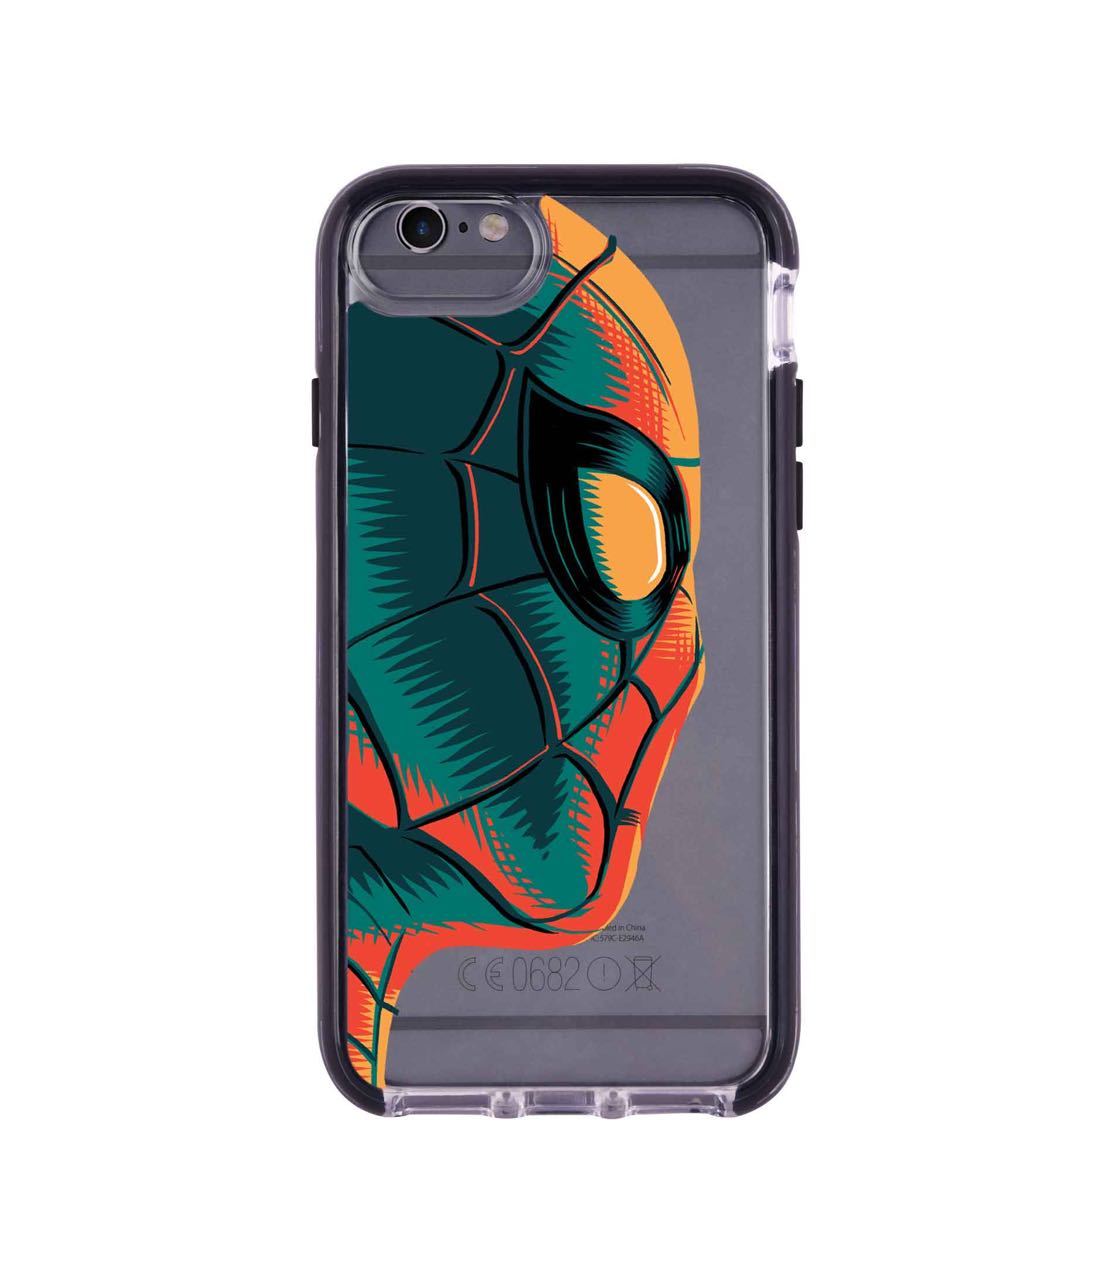 Illuminated Spiderman - Extreme Phone Case for iPhone 6 Plus